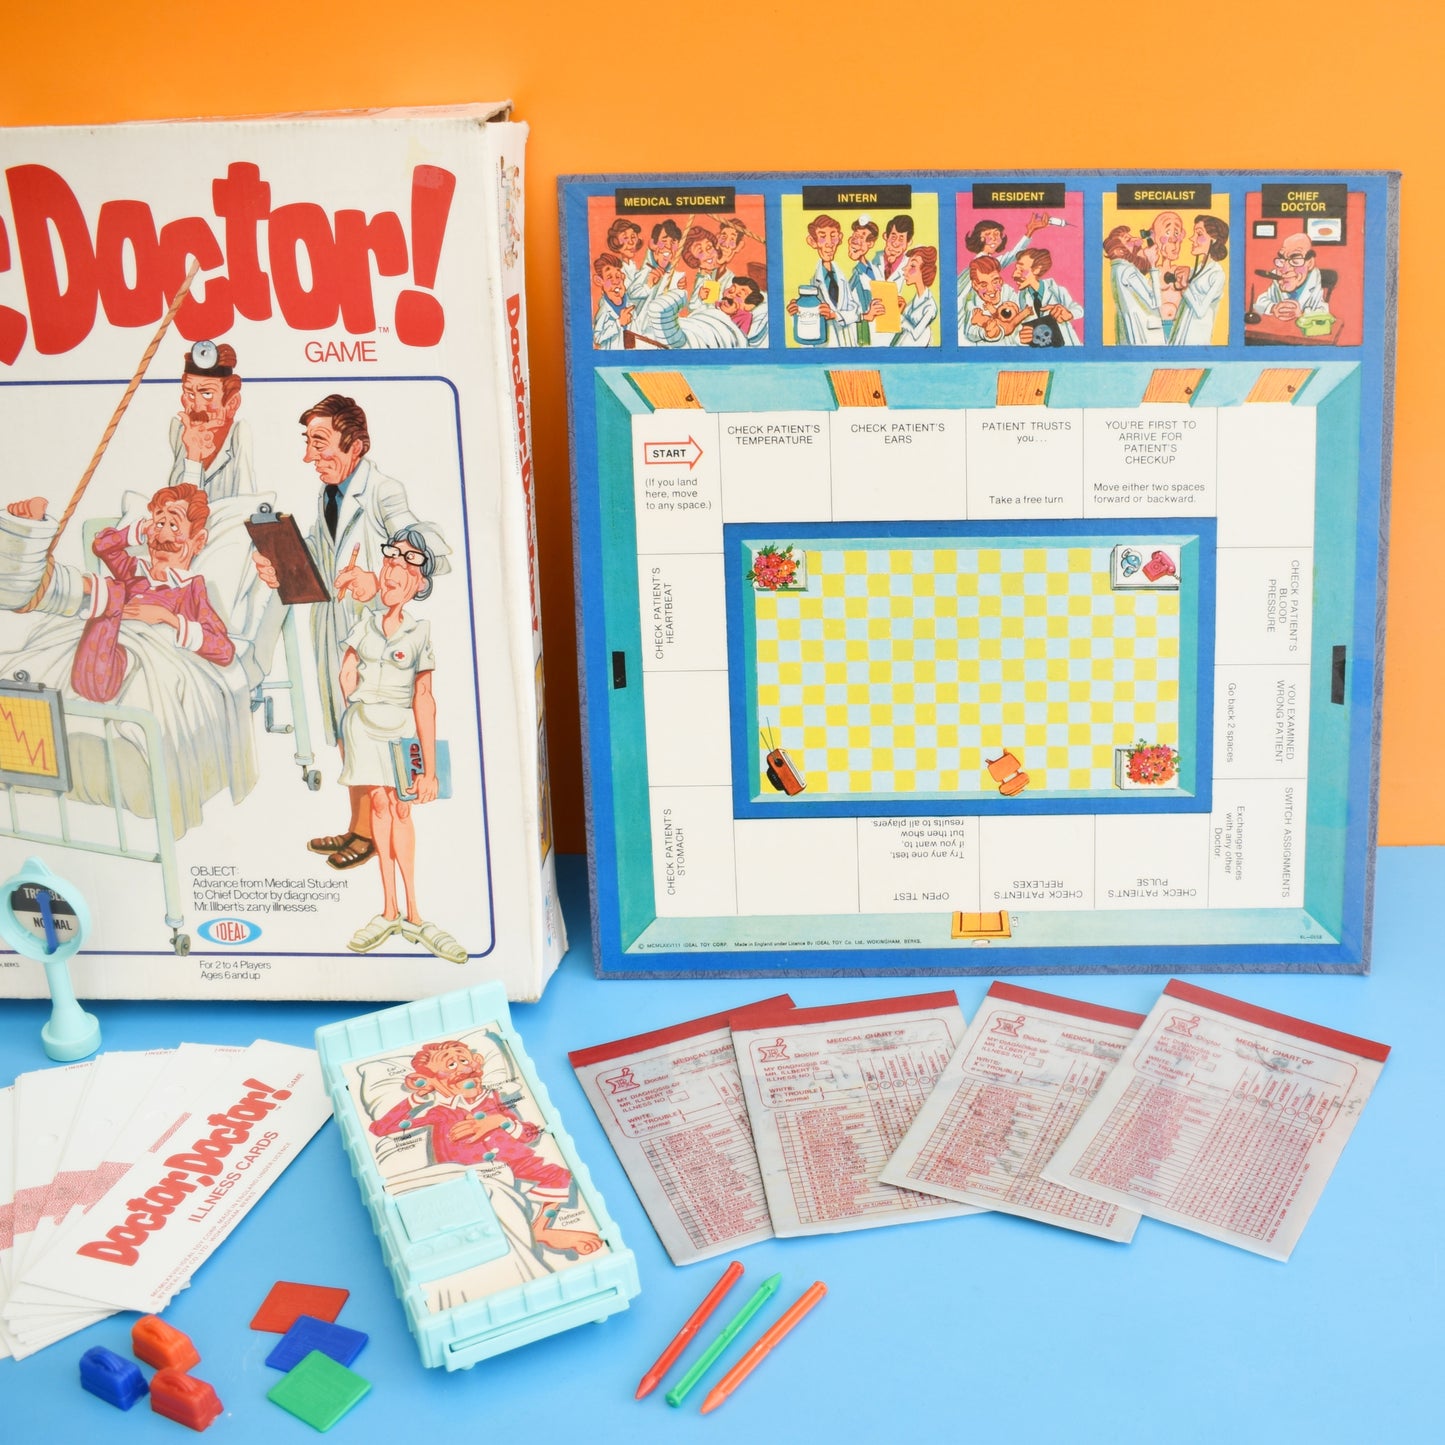 Vintage 1970s Doctor Doctor Game - Ideal